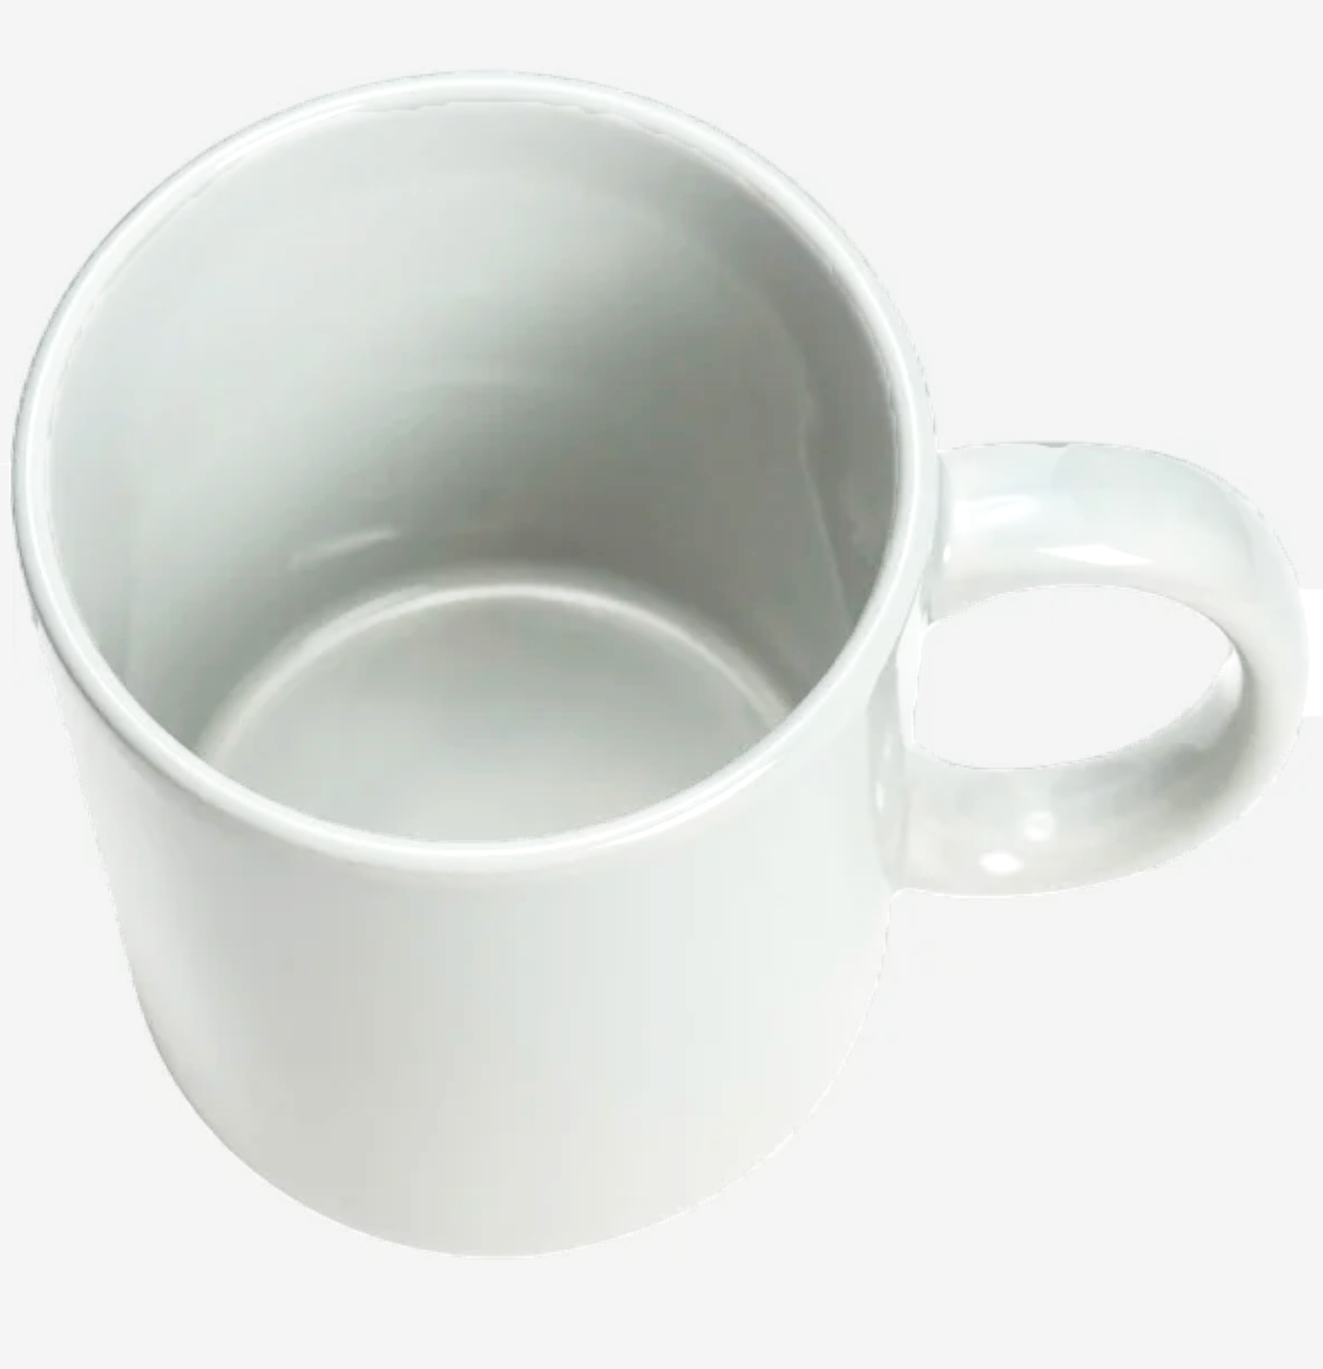 I Hope Everyone Enjoys Their Thanksgiving (White) - 11oz Mug